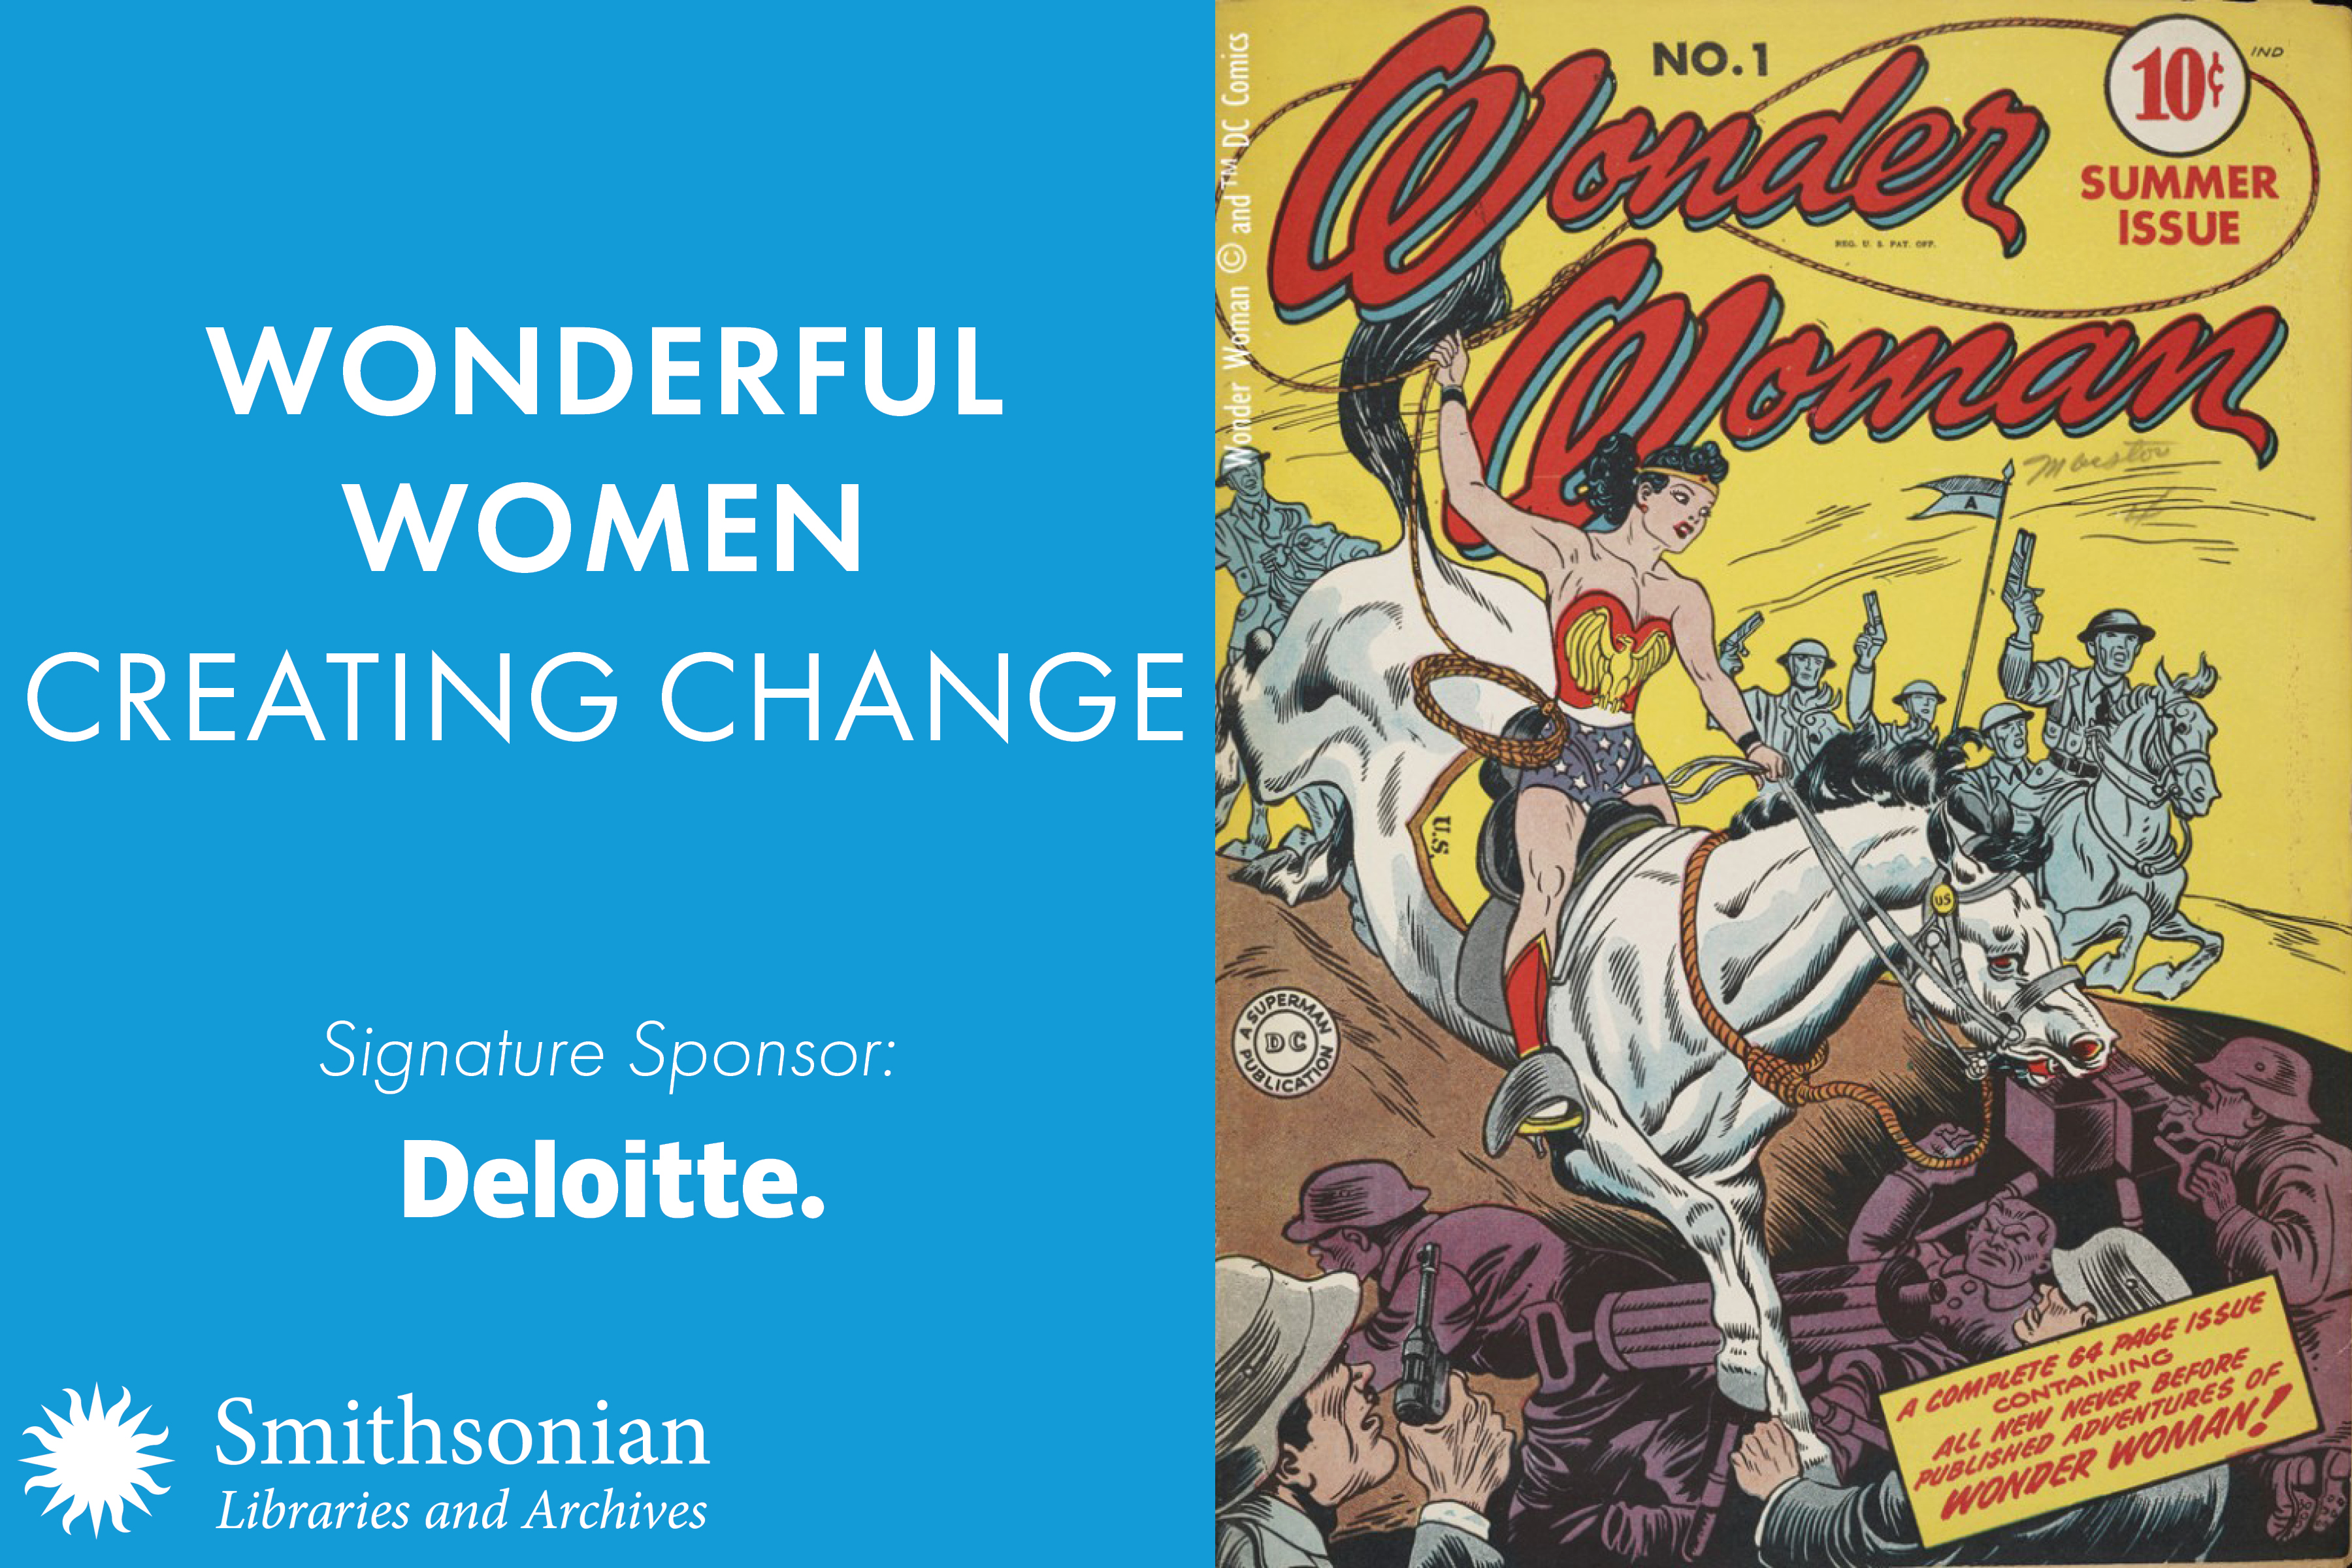 Wonderul Women Creating Change - Signature Sponsor: Deloitte with cover of Wonder Woman comic